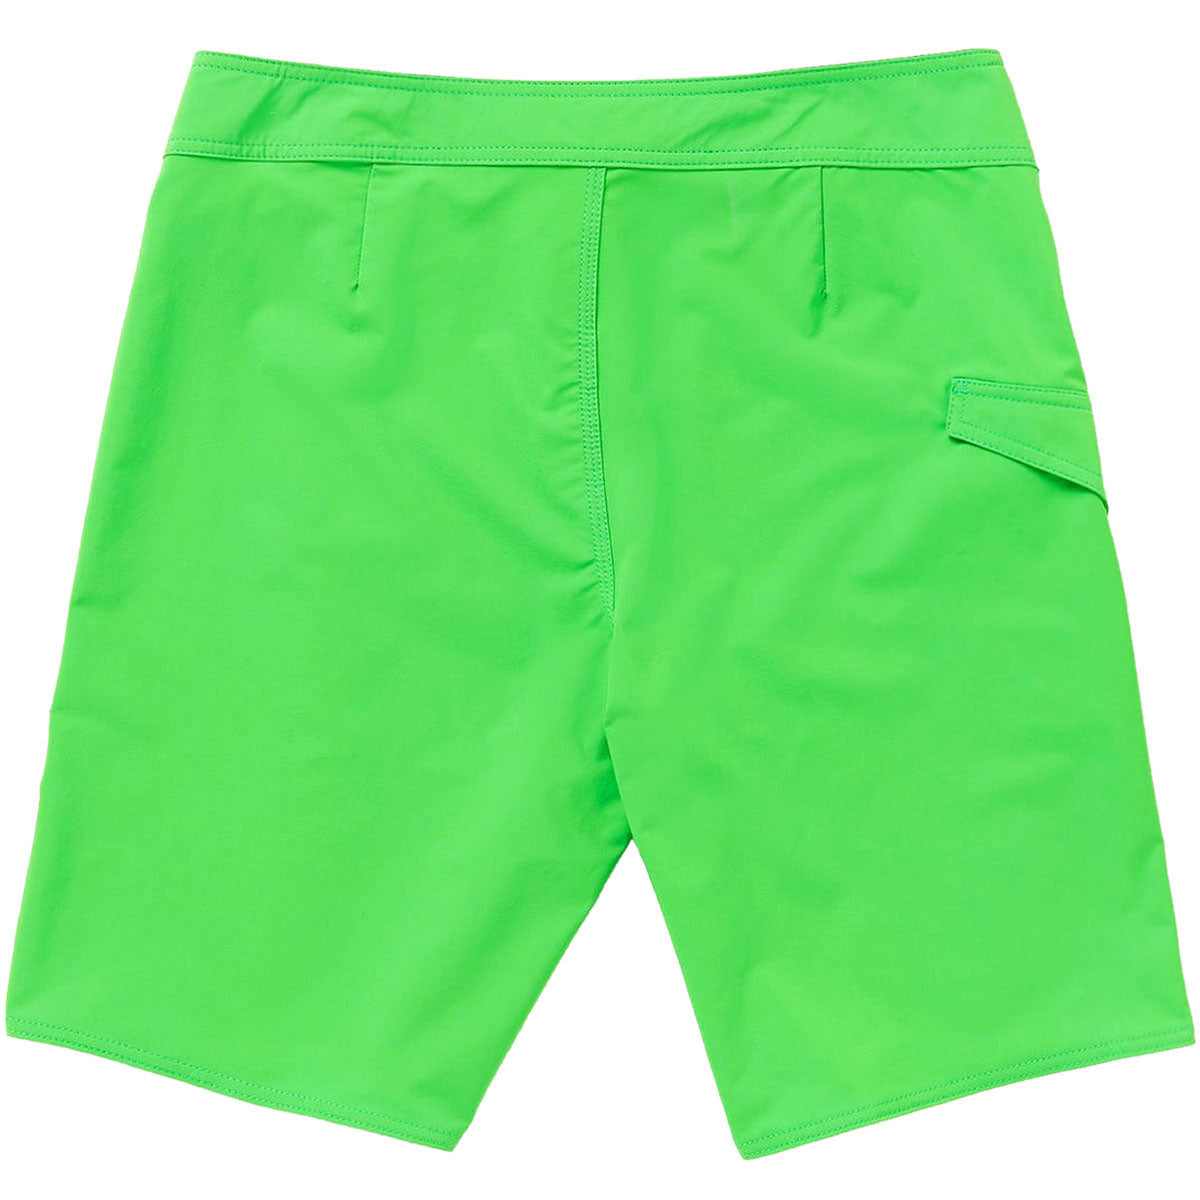 Volcom Lido Solid Mod 20 Board Shorts - Spring Green image 2